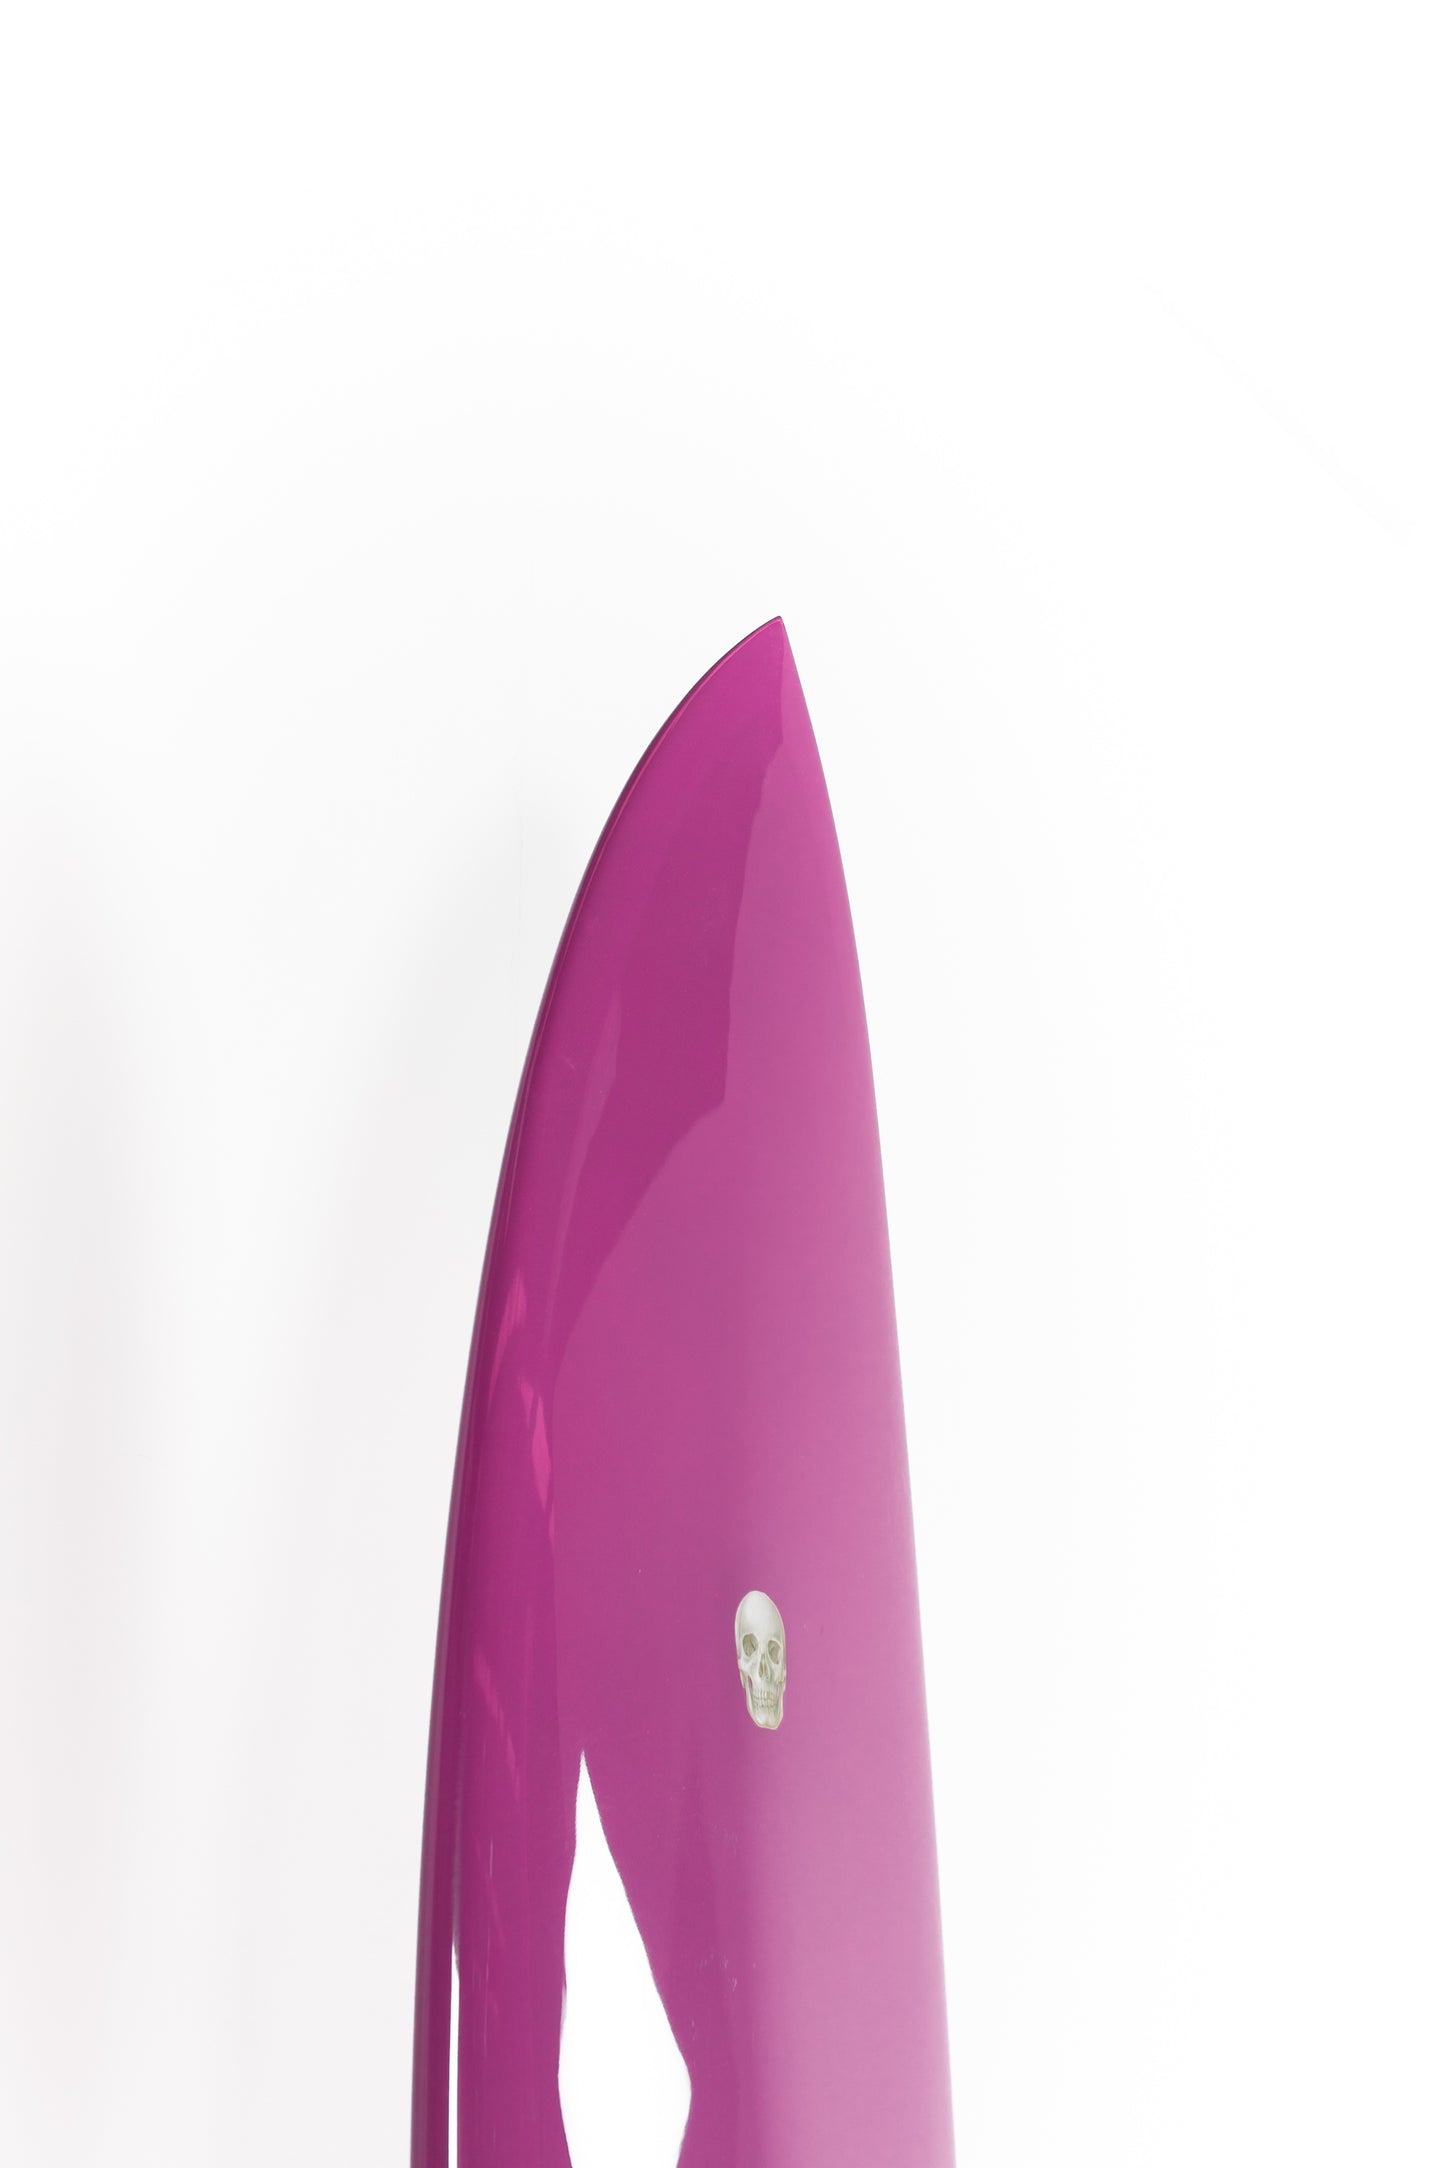 
                  
                    Pukas Surf Shop - Christenson Surfboards - ULTRA TRACKER - 8'0" x 21 1/2 x 3 1/4 - CX04707
                  
                